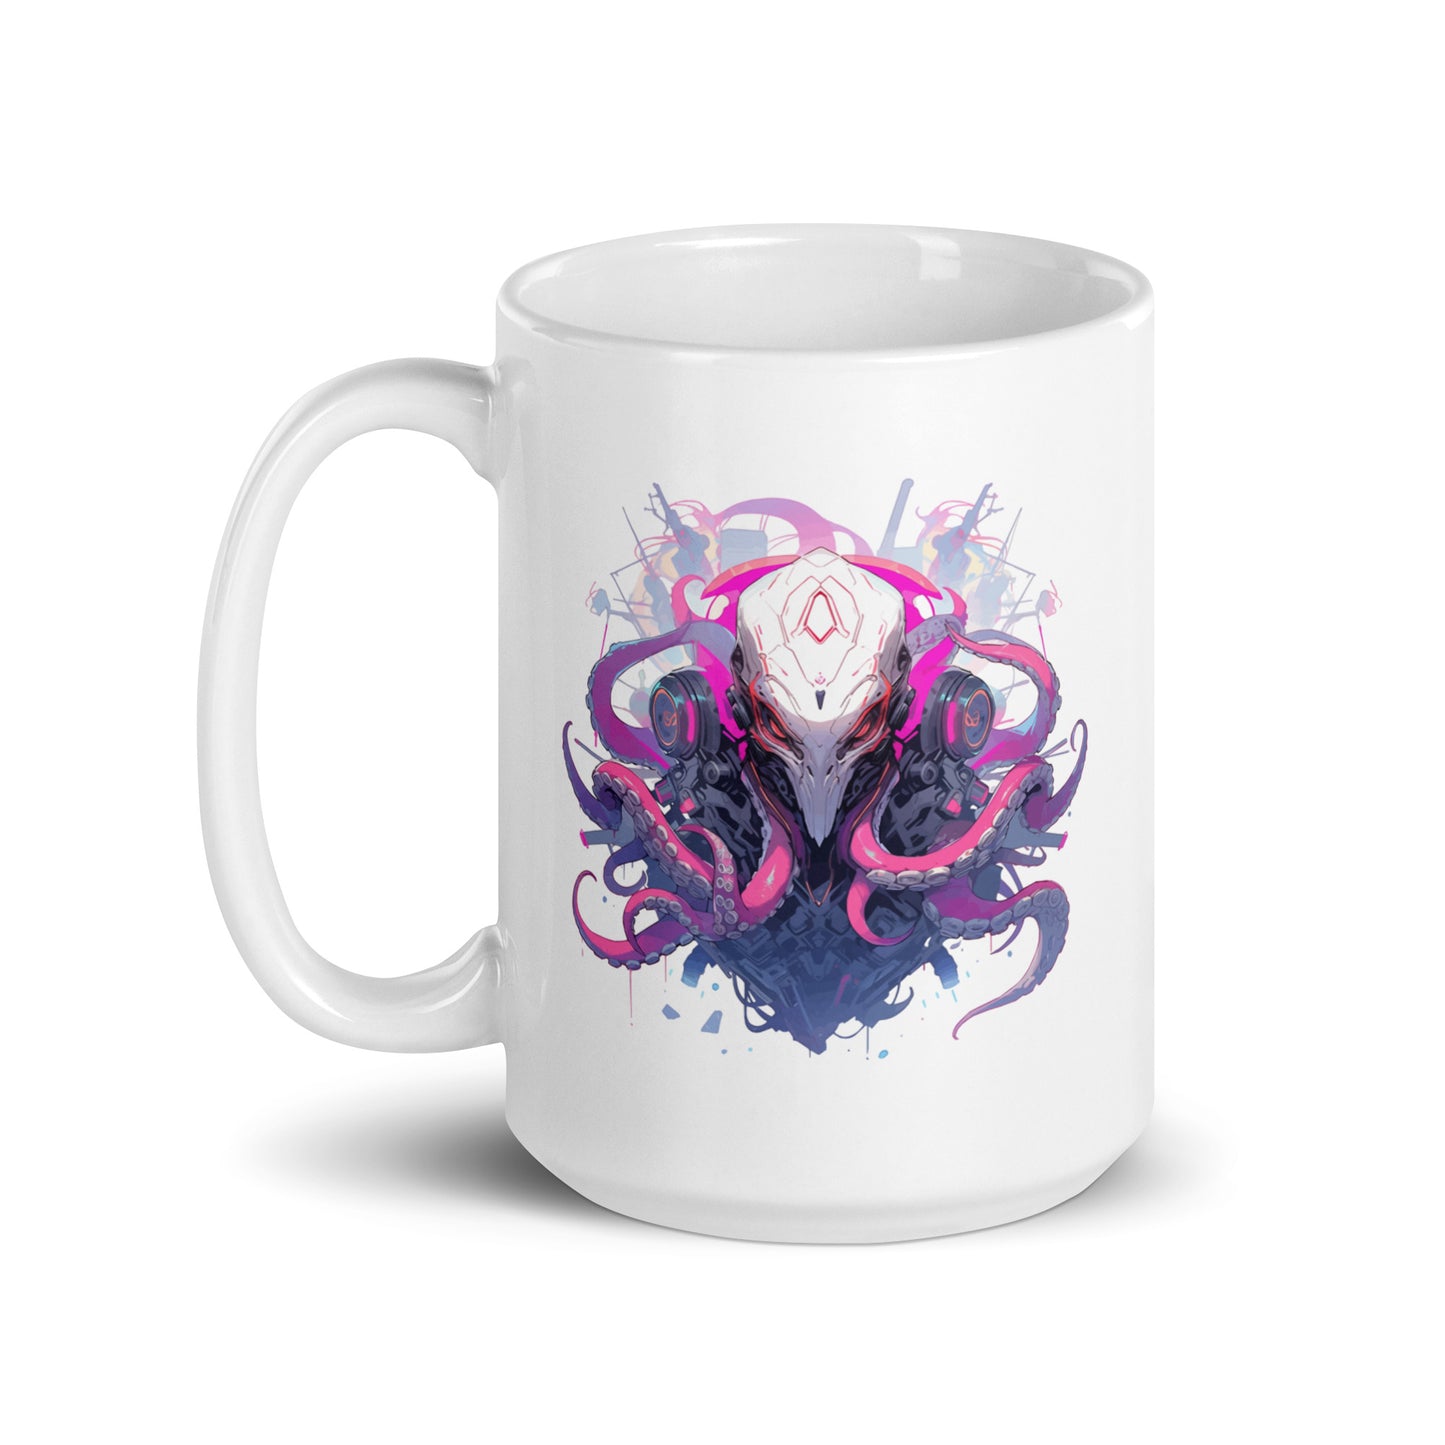 Cyberpunk fantastic animals, Fantasy portrait of cyber octopus, Octopus illustration manga style - White glossy mug